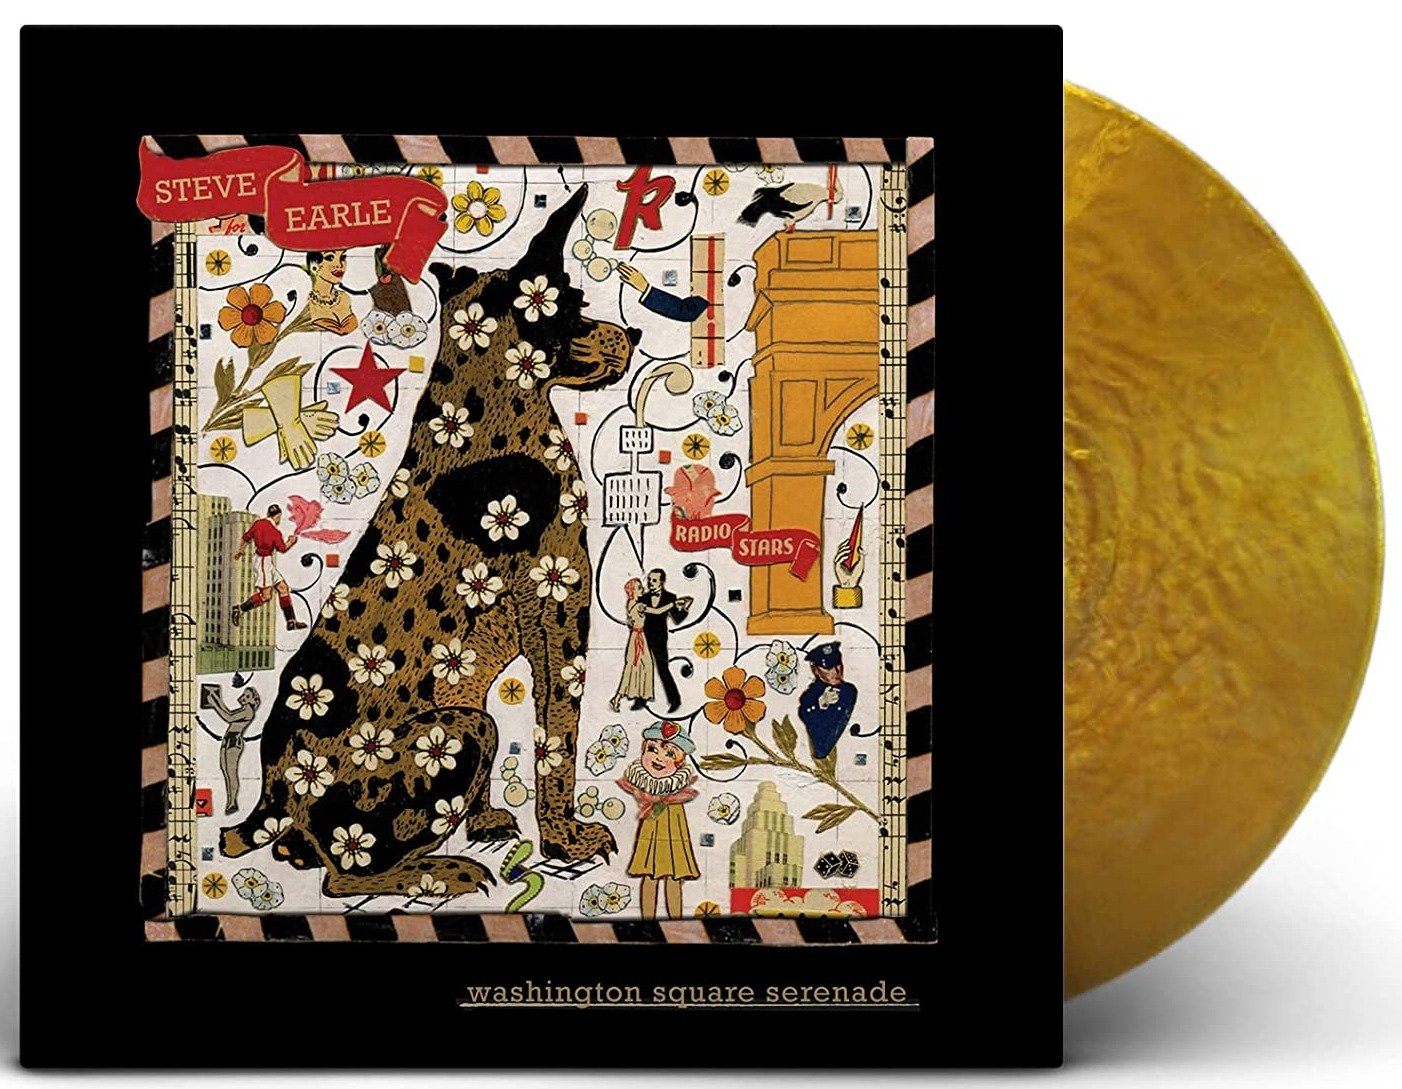 STEVE EARLE 'WASHINGTON SQUARE SERENADE' LP (METALLIC GOLD VINYL)